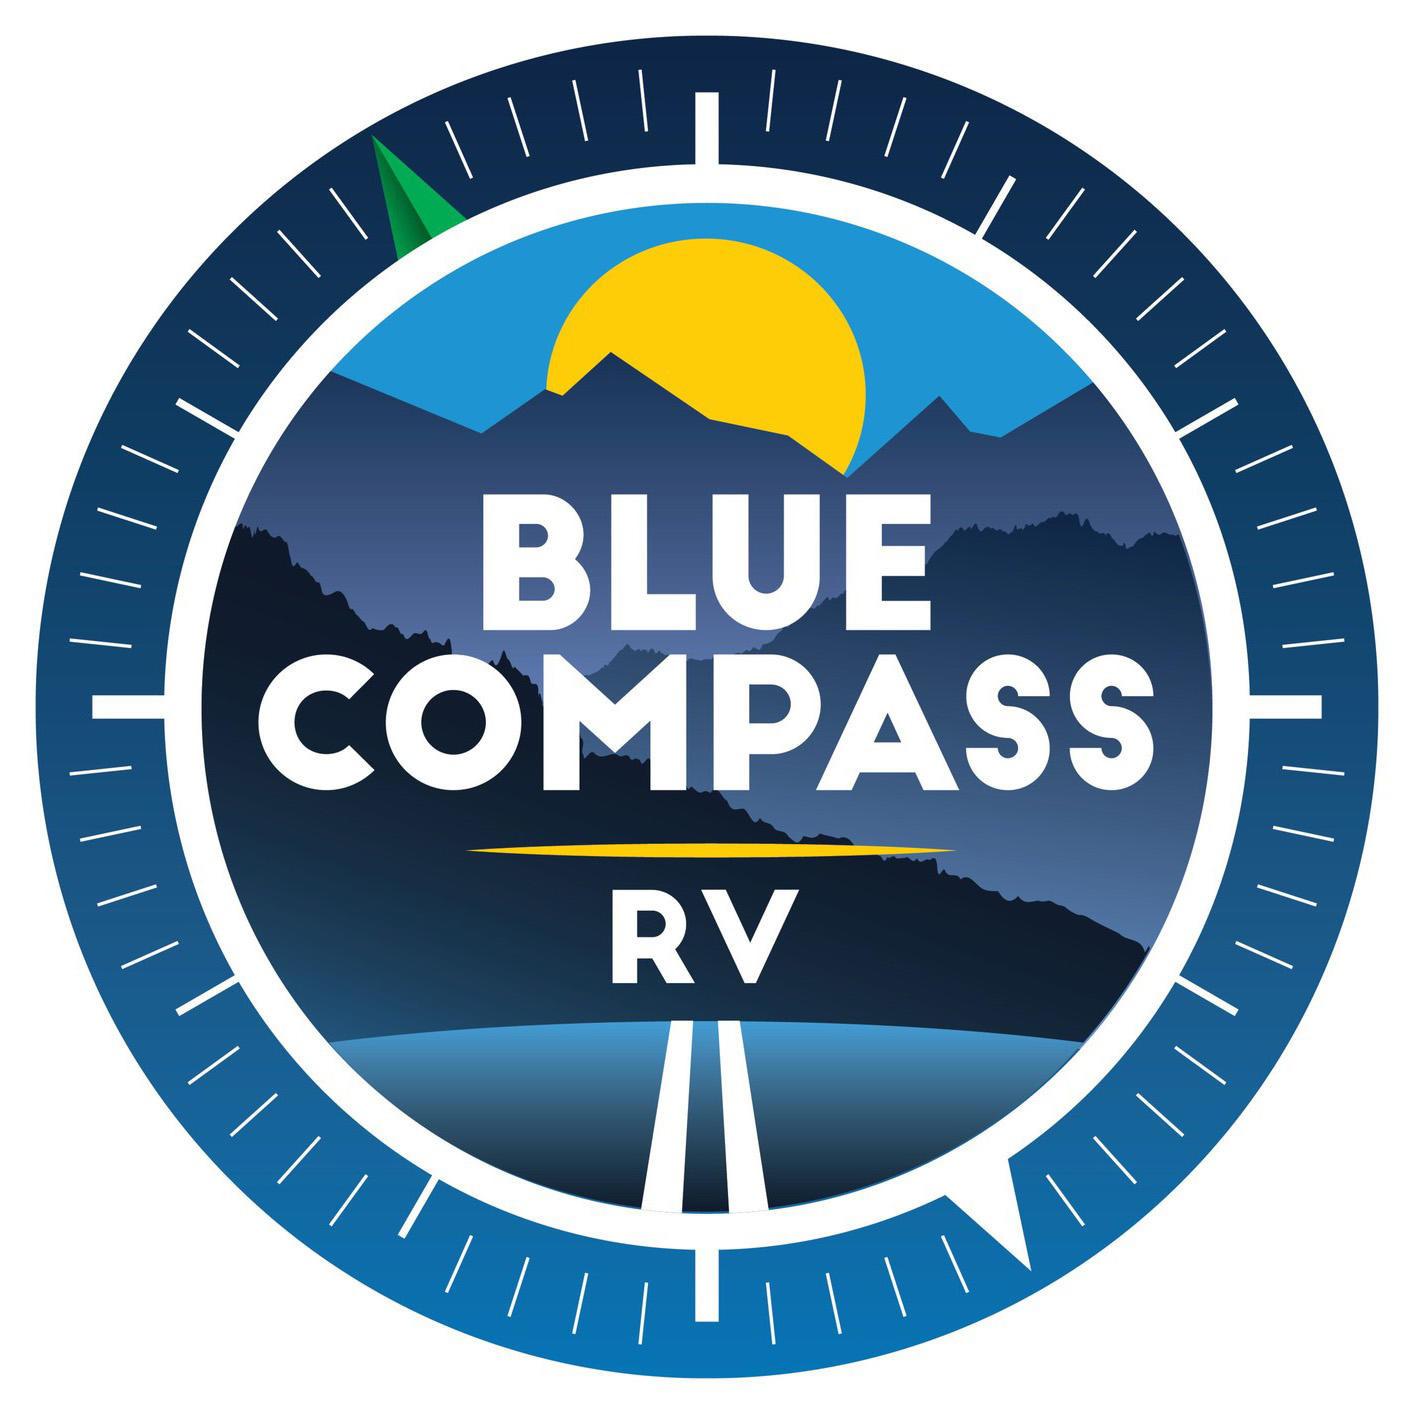 Blue Compass RV Medford